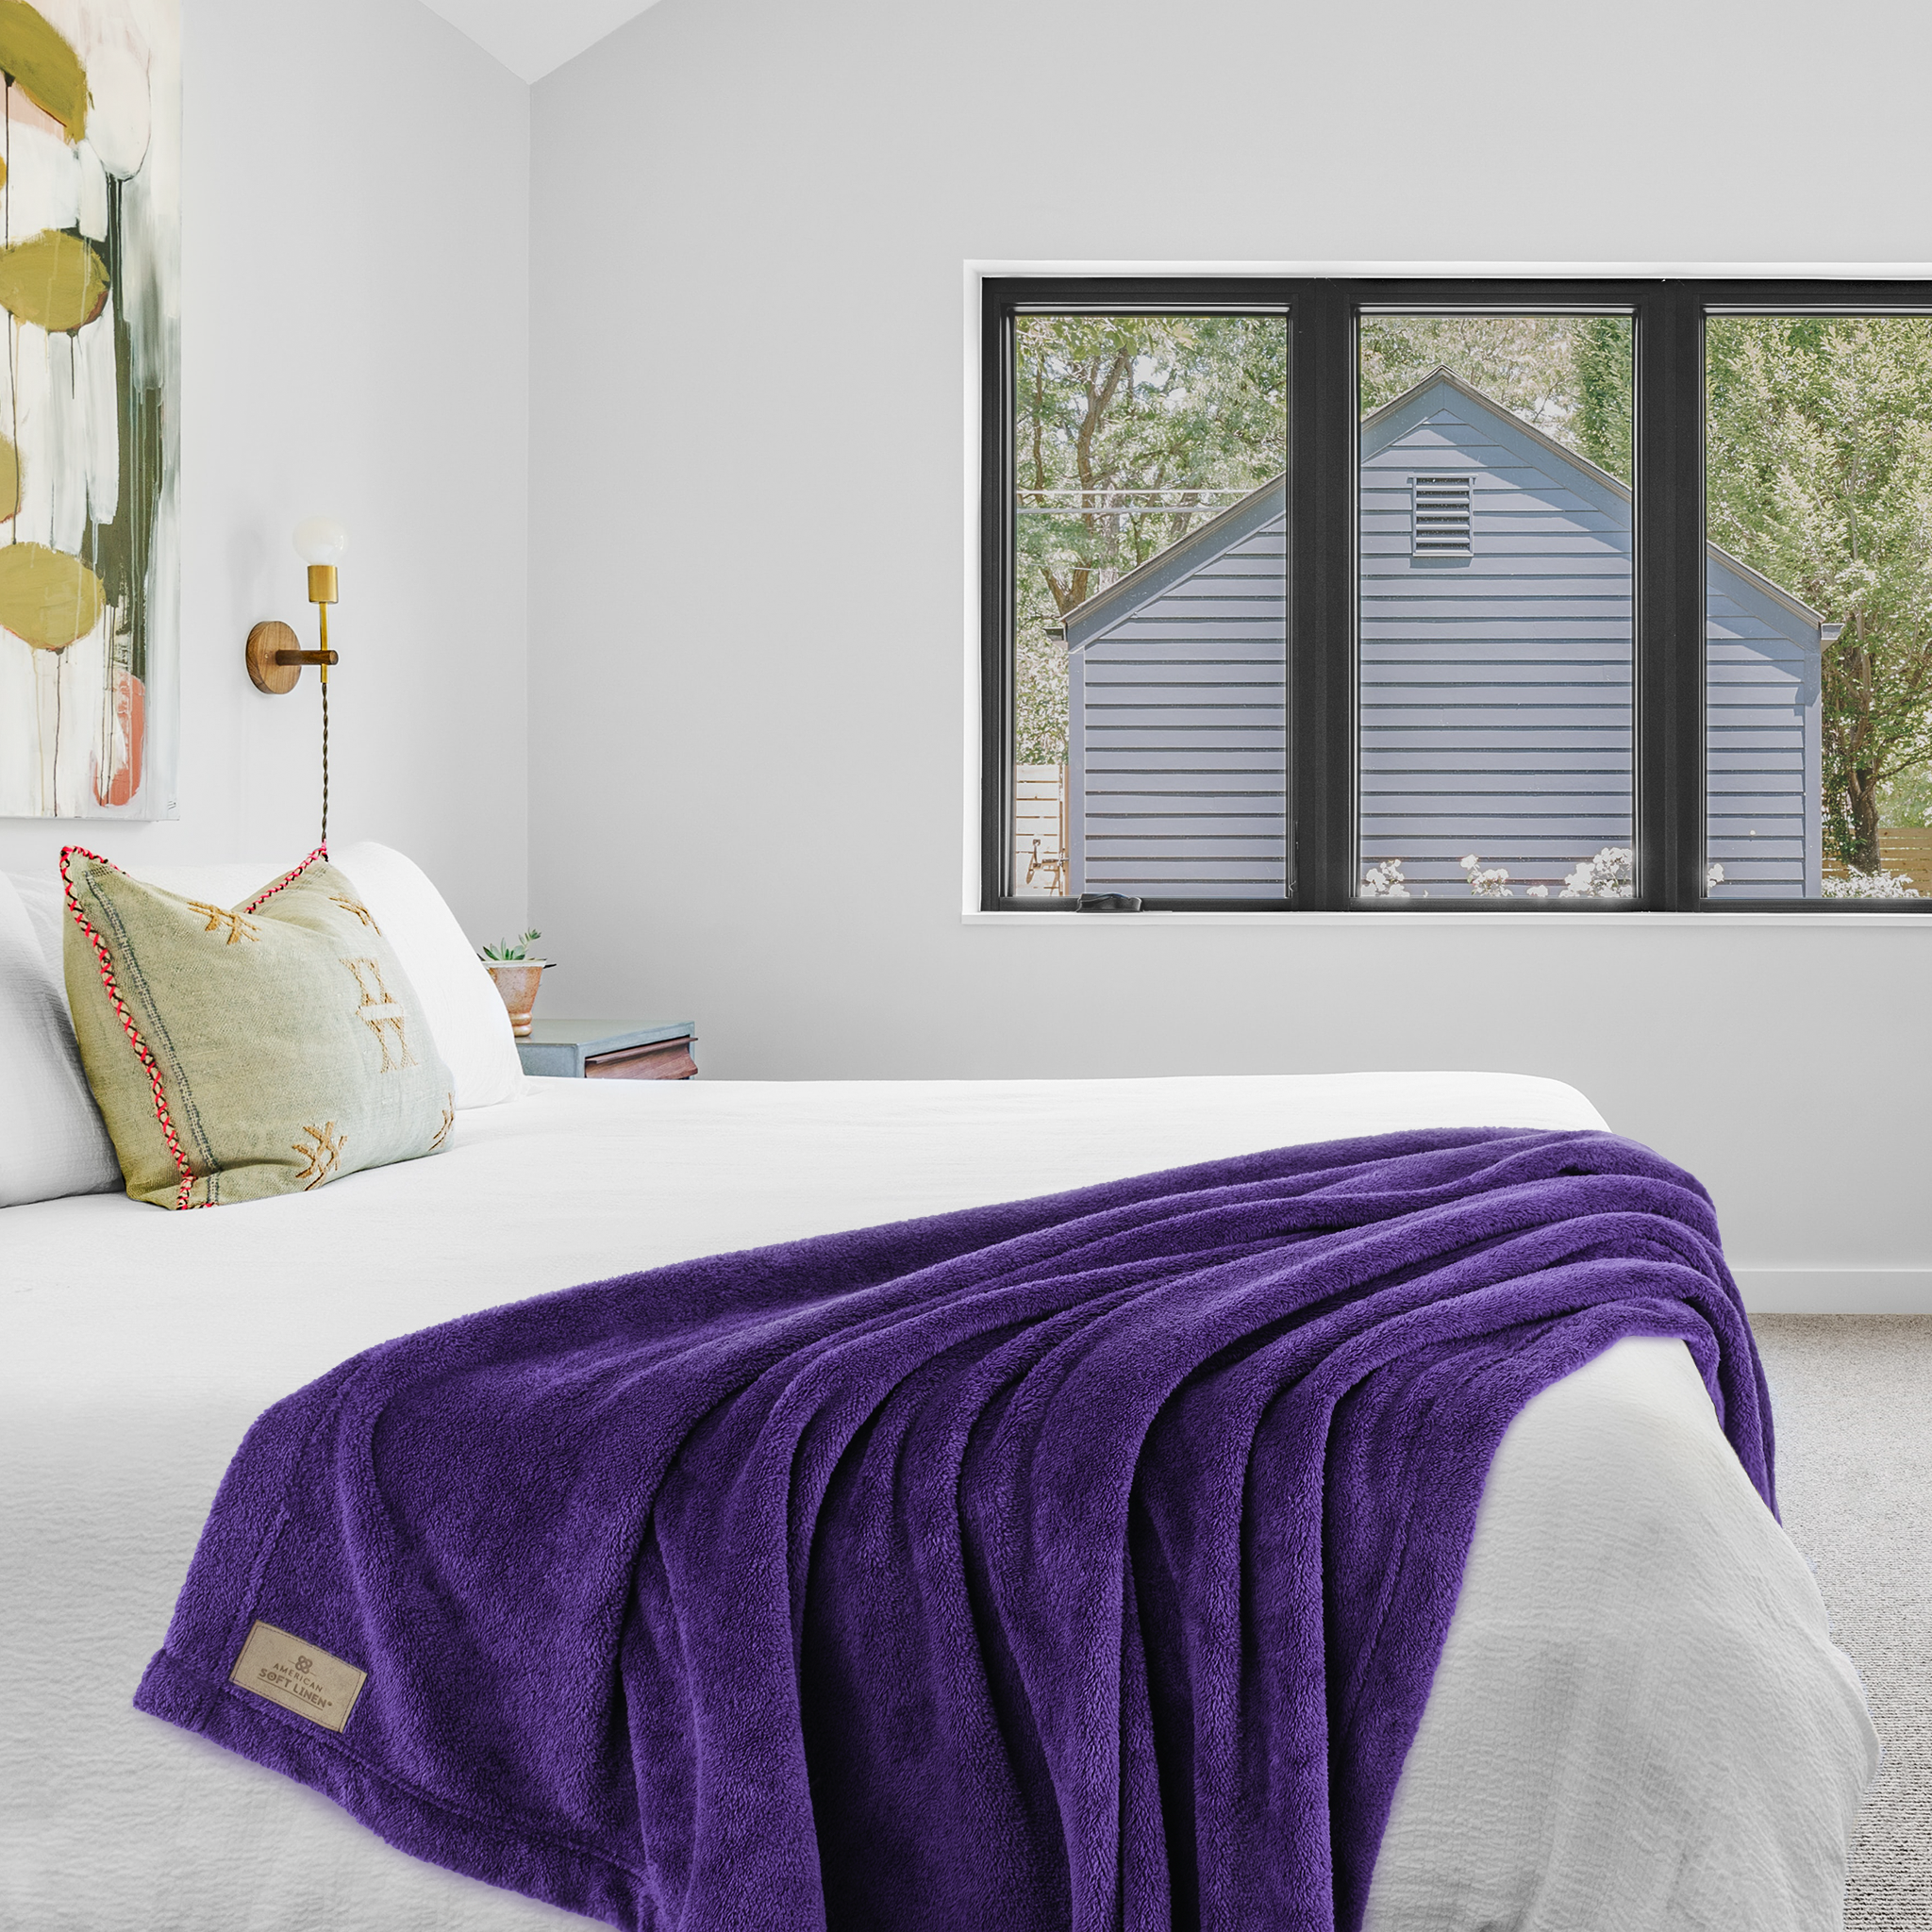 American Soft Linen - Bedding Fleece Blanket - Twin Size 60x80 inches - Purple - 2